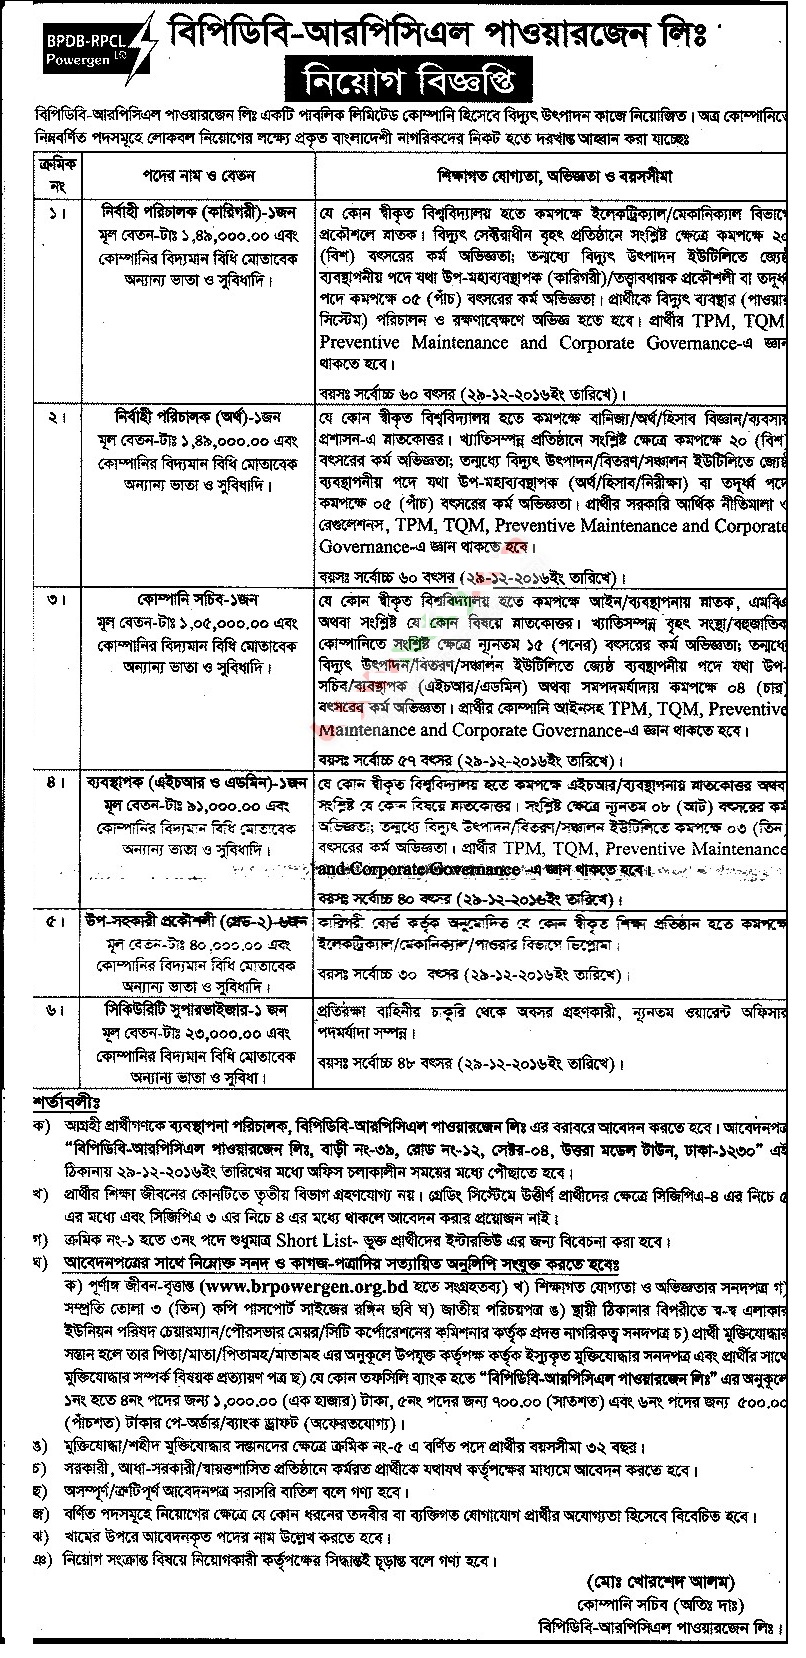 Bangladesh Power Development Board Job Circular 2016